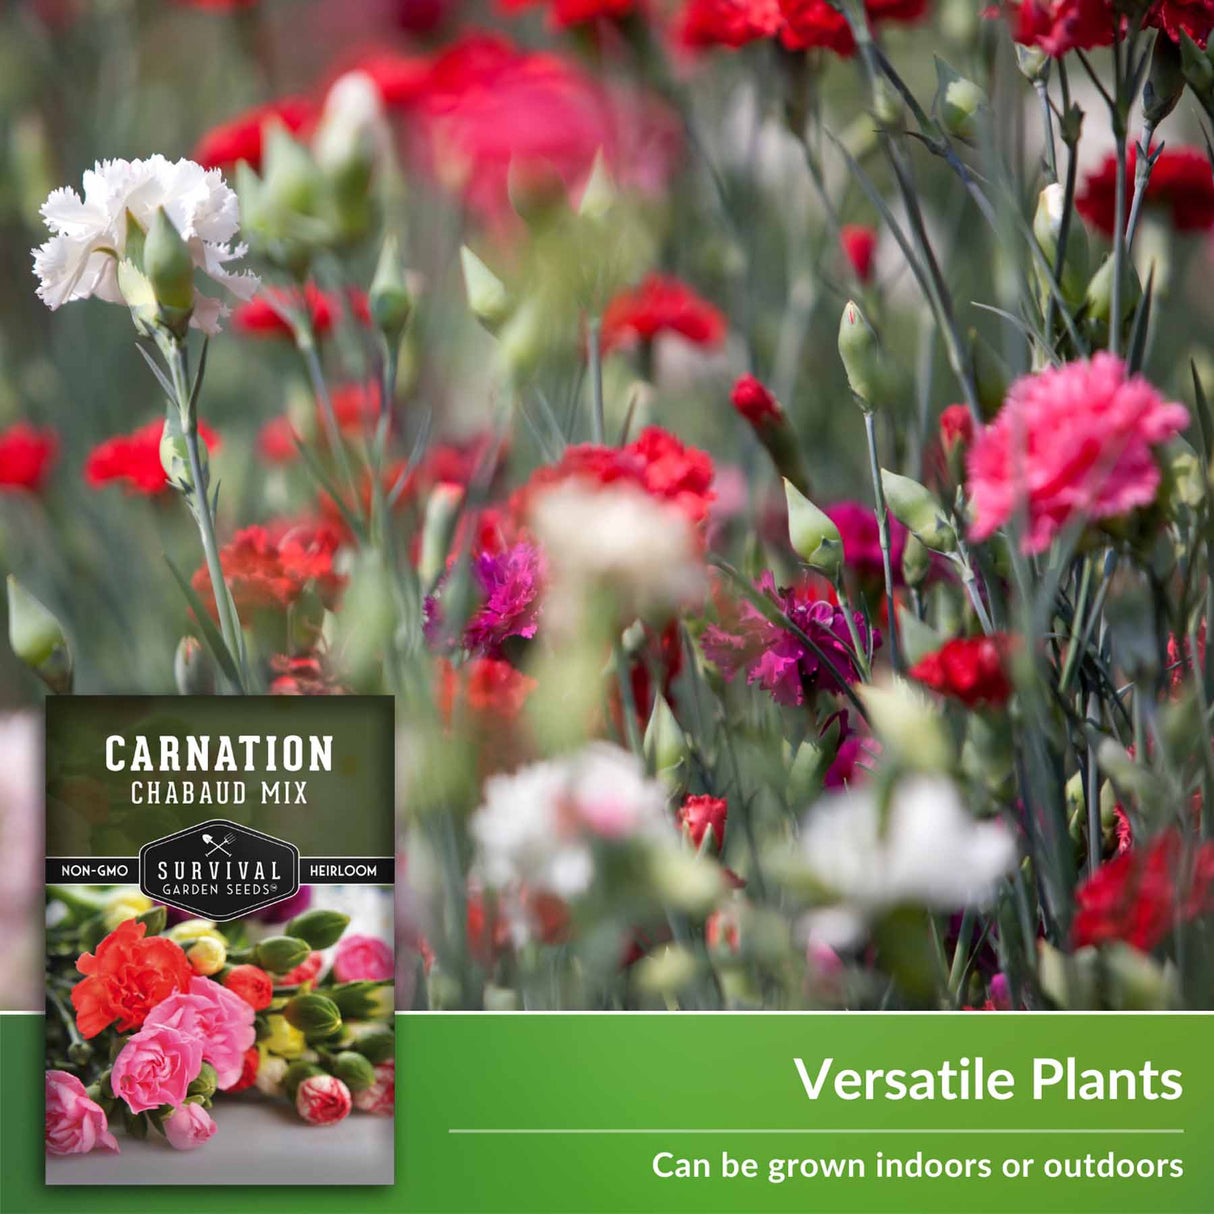 Versatile plants